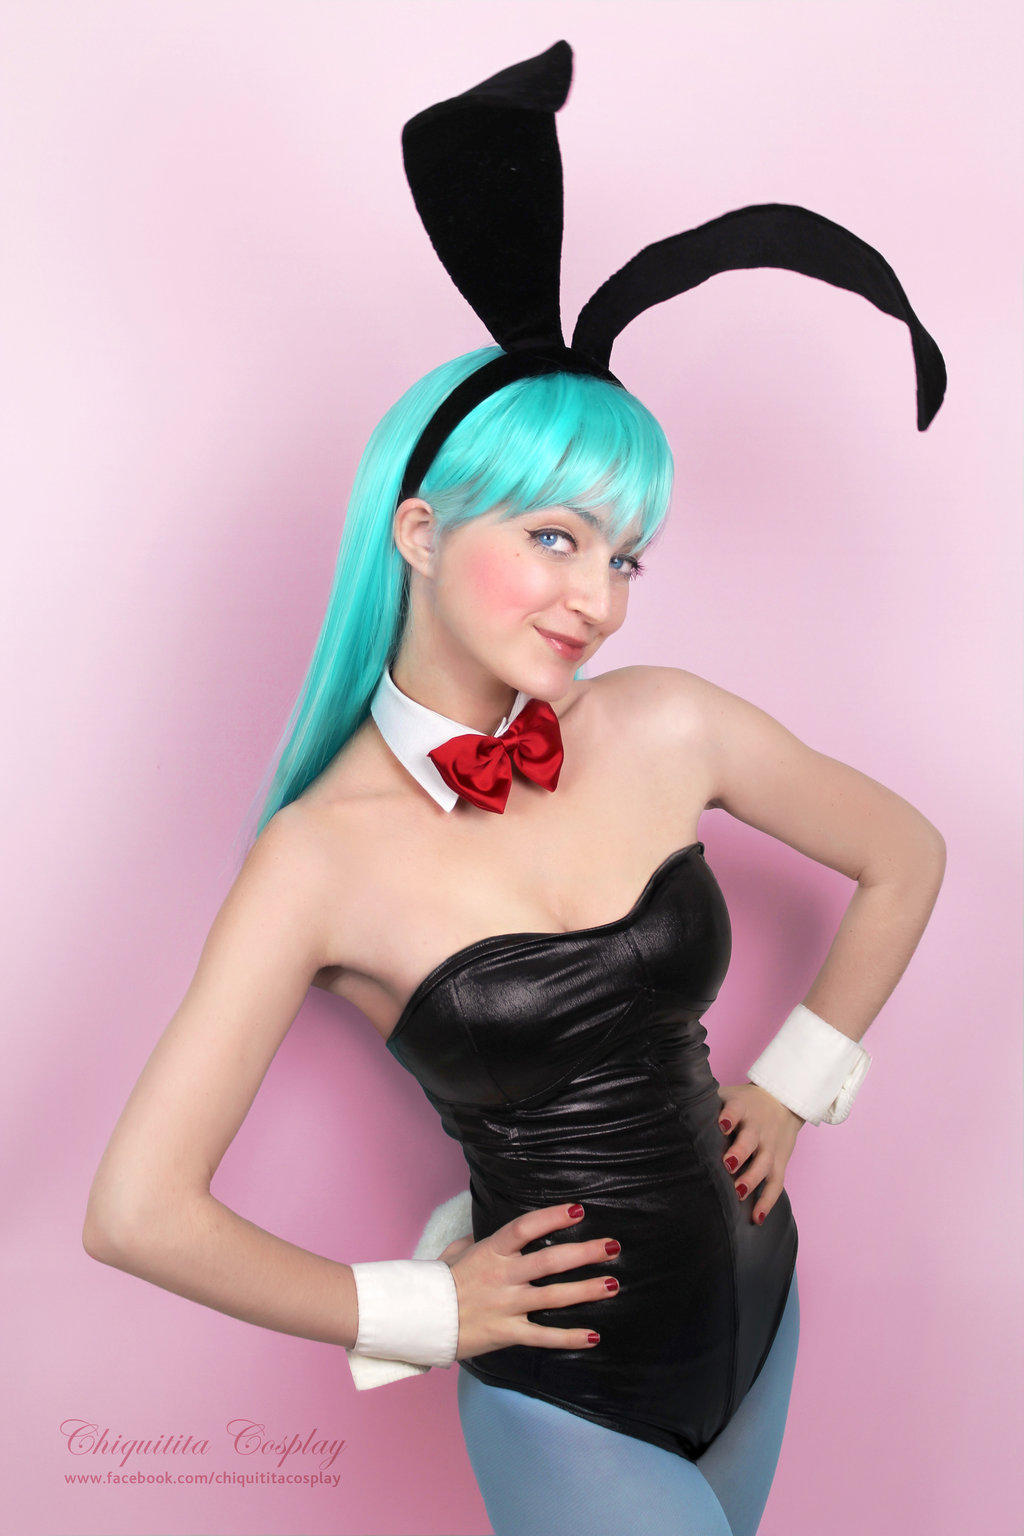 bulma___bunny_girl_outfit_by_chiquitita_cosplay-d5plhb9.jpg